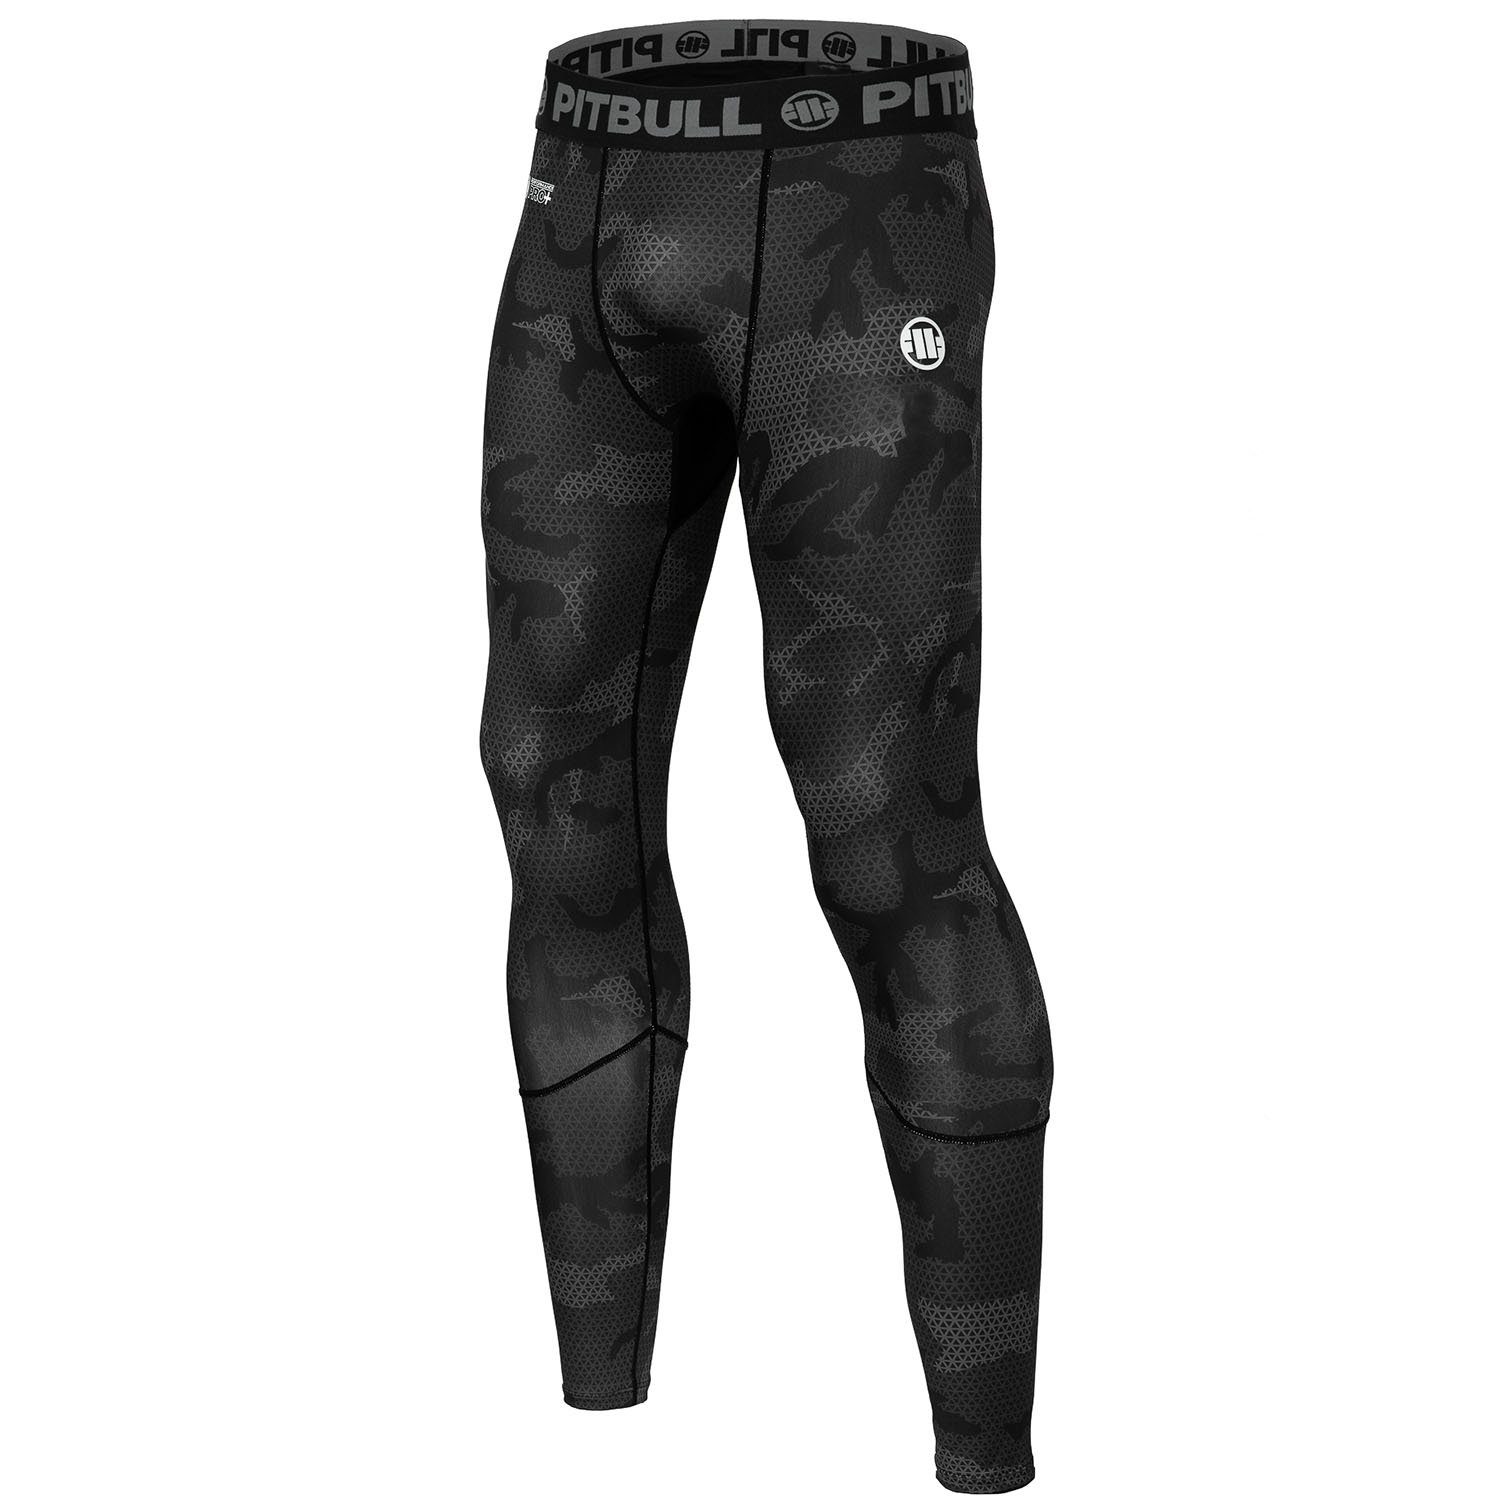 Pit Bull West Coast Compression Pants, Net-camo 2, black-camo, XXXL